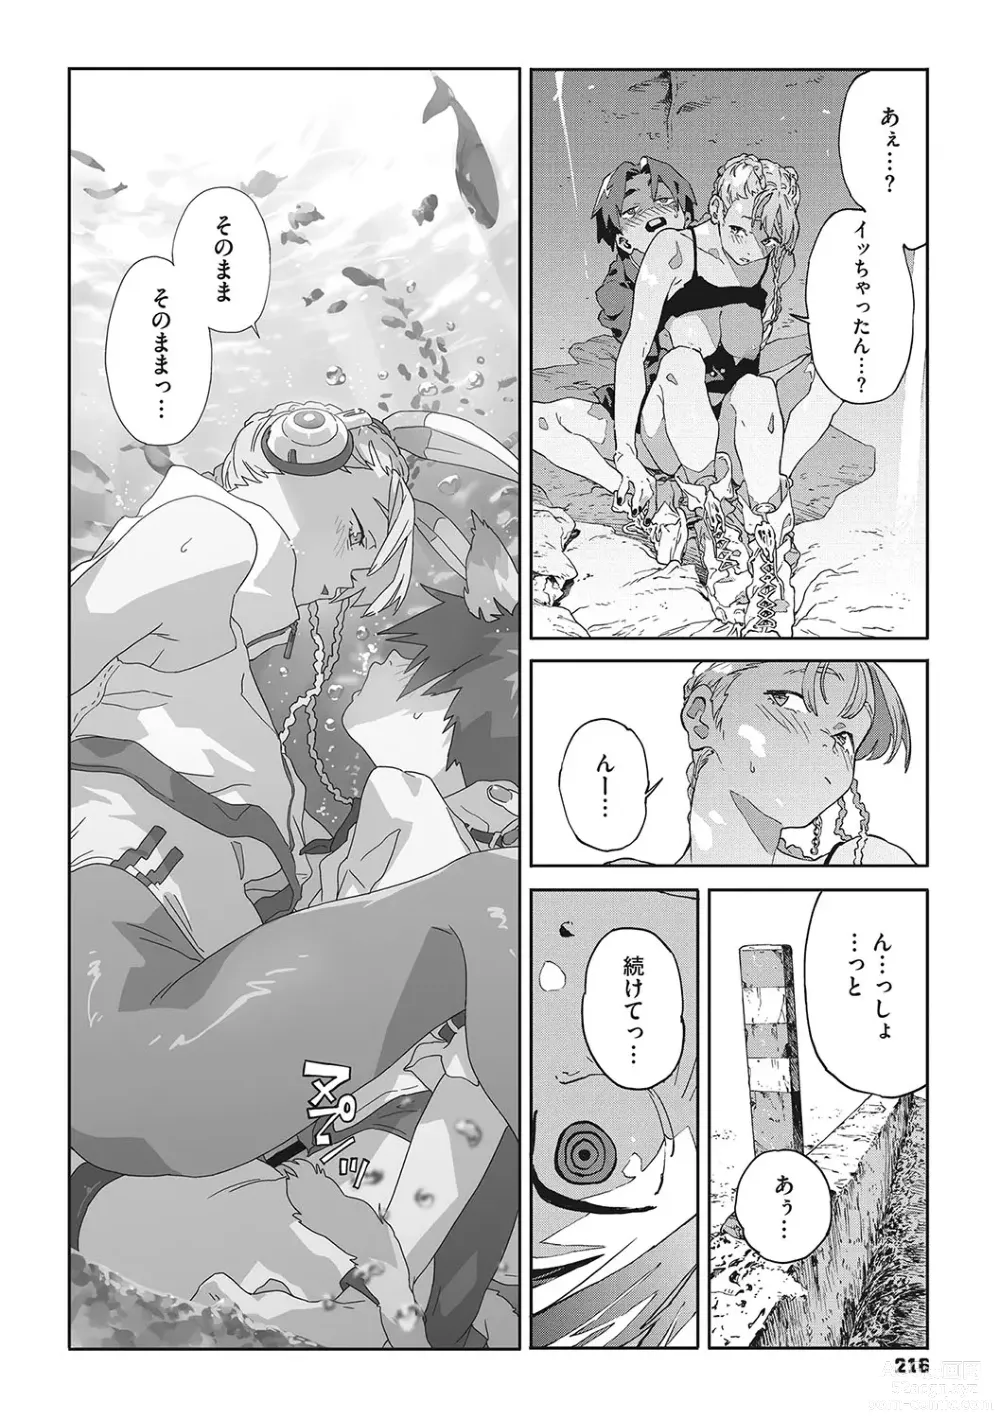 Page 215 of manga Ito o Yoru